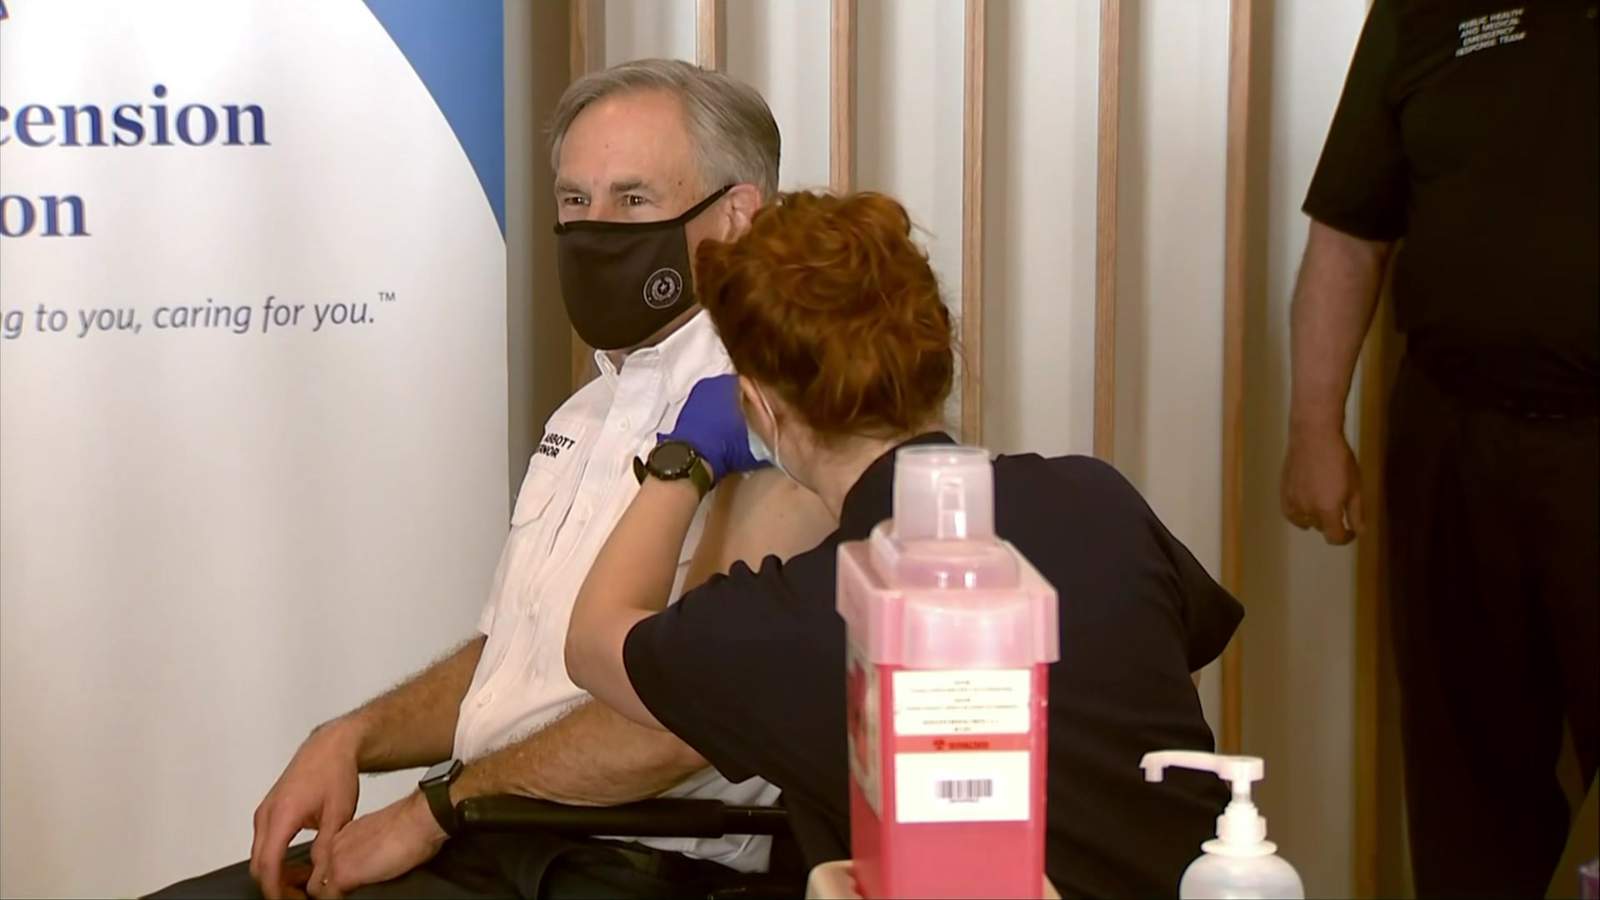 ‘It’s that easy’: Abbott receives coronavirus vaccine to bolster confidence in shot